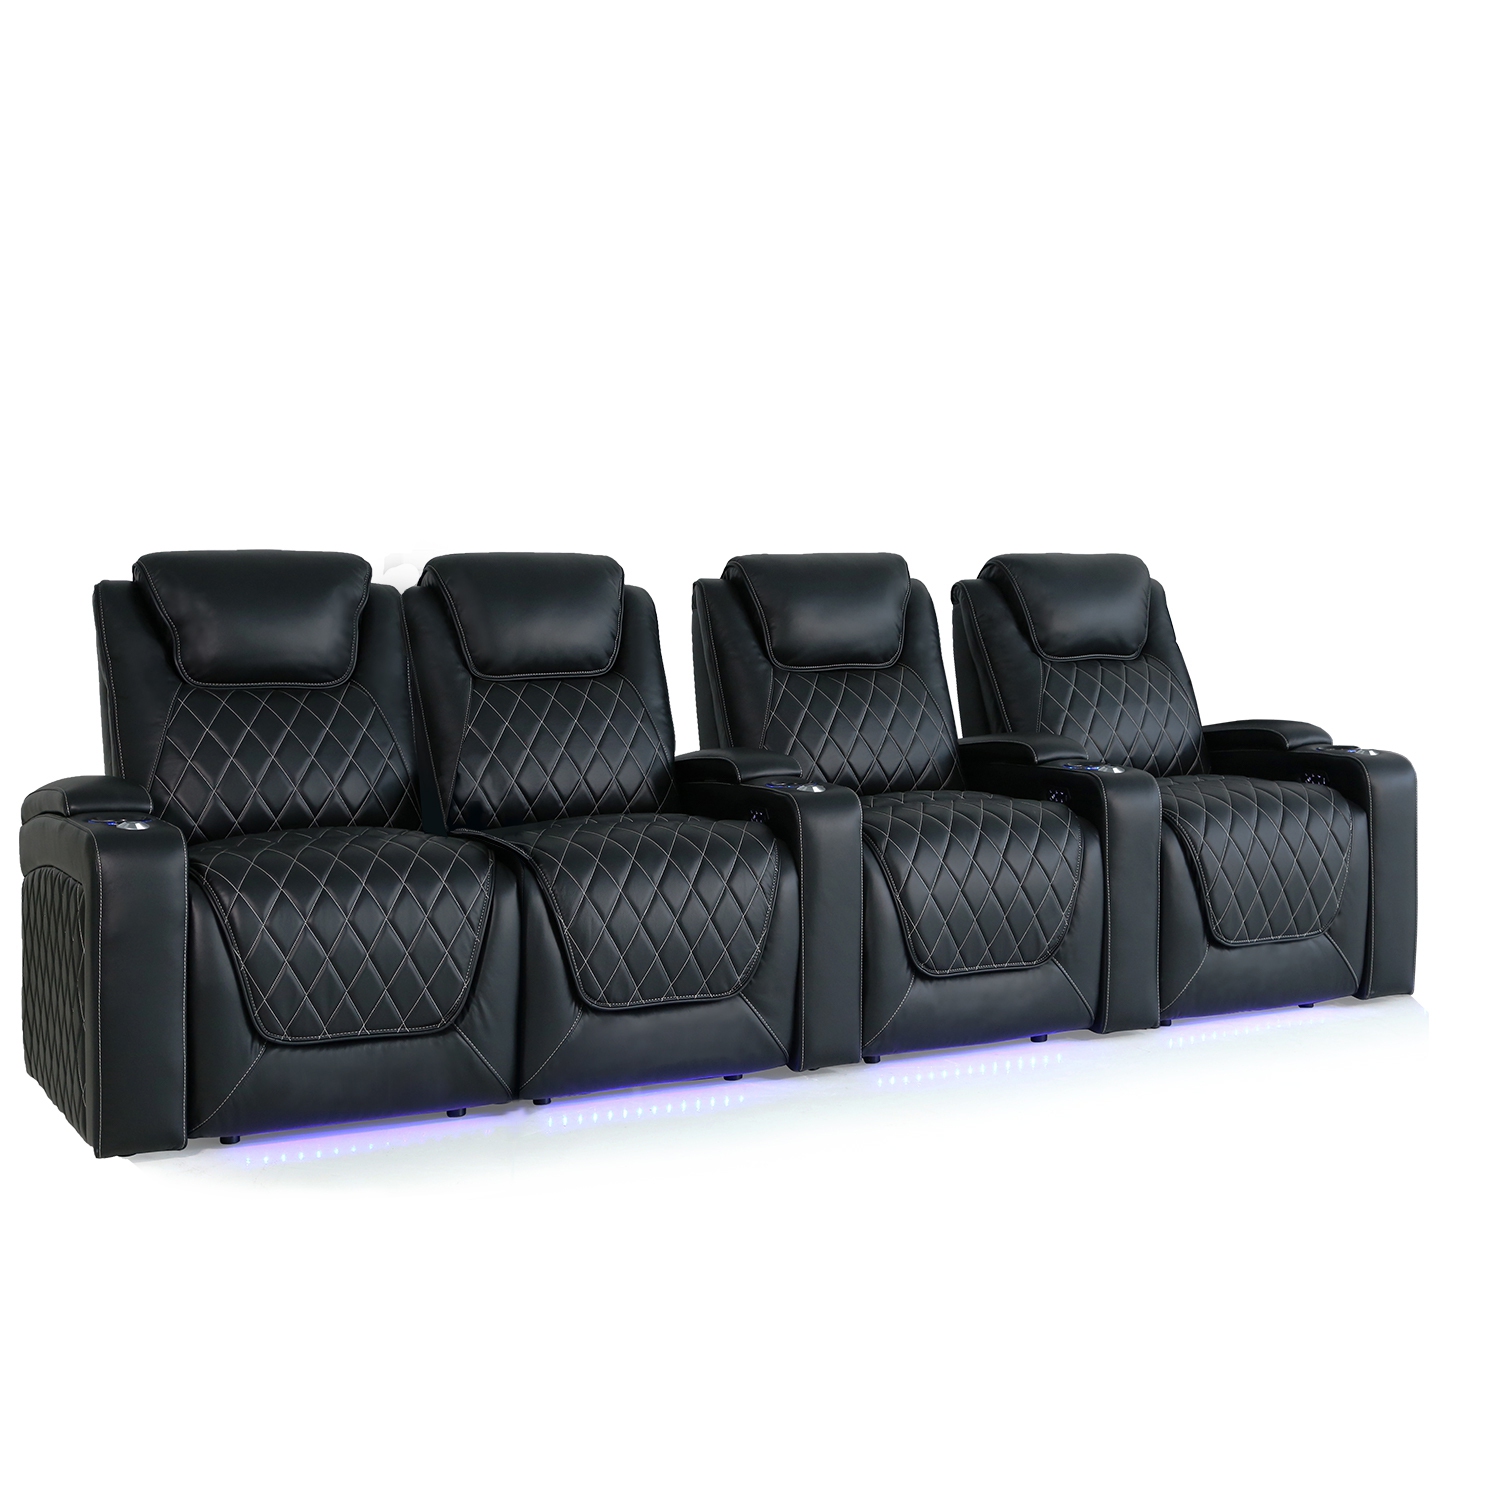 Valencia Oslo Premium Top Grain Leather Power Recliner, Power Headrest LED Lighting Home Theatre Seating 4-seats Loveseat Left